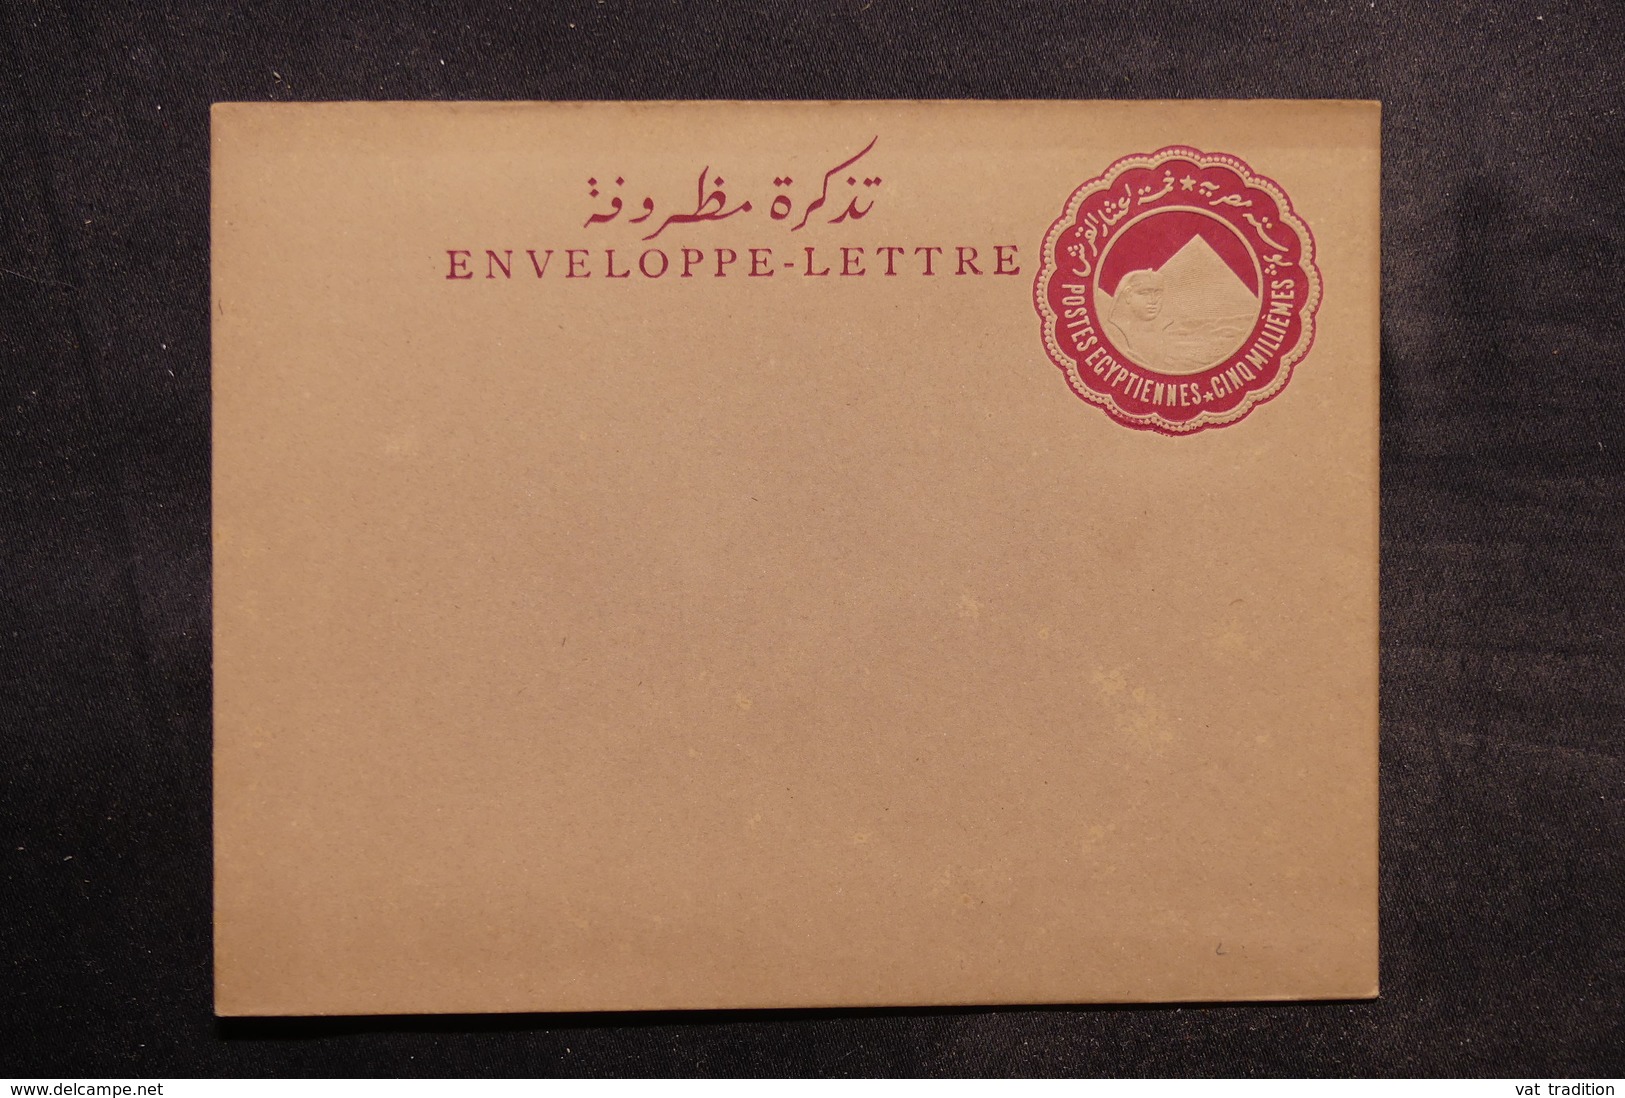 EGYPTE - Entier Postal Non Circulé - L 33554 - 1915-1921 British Protectorate